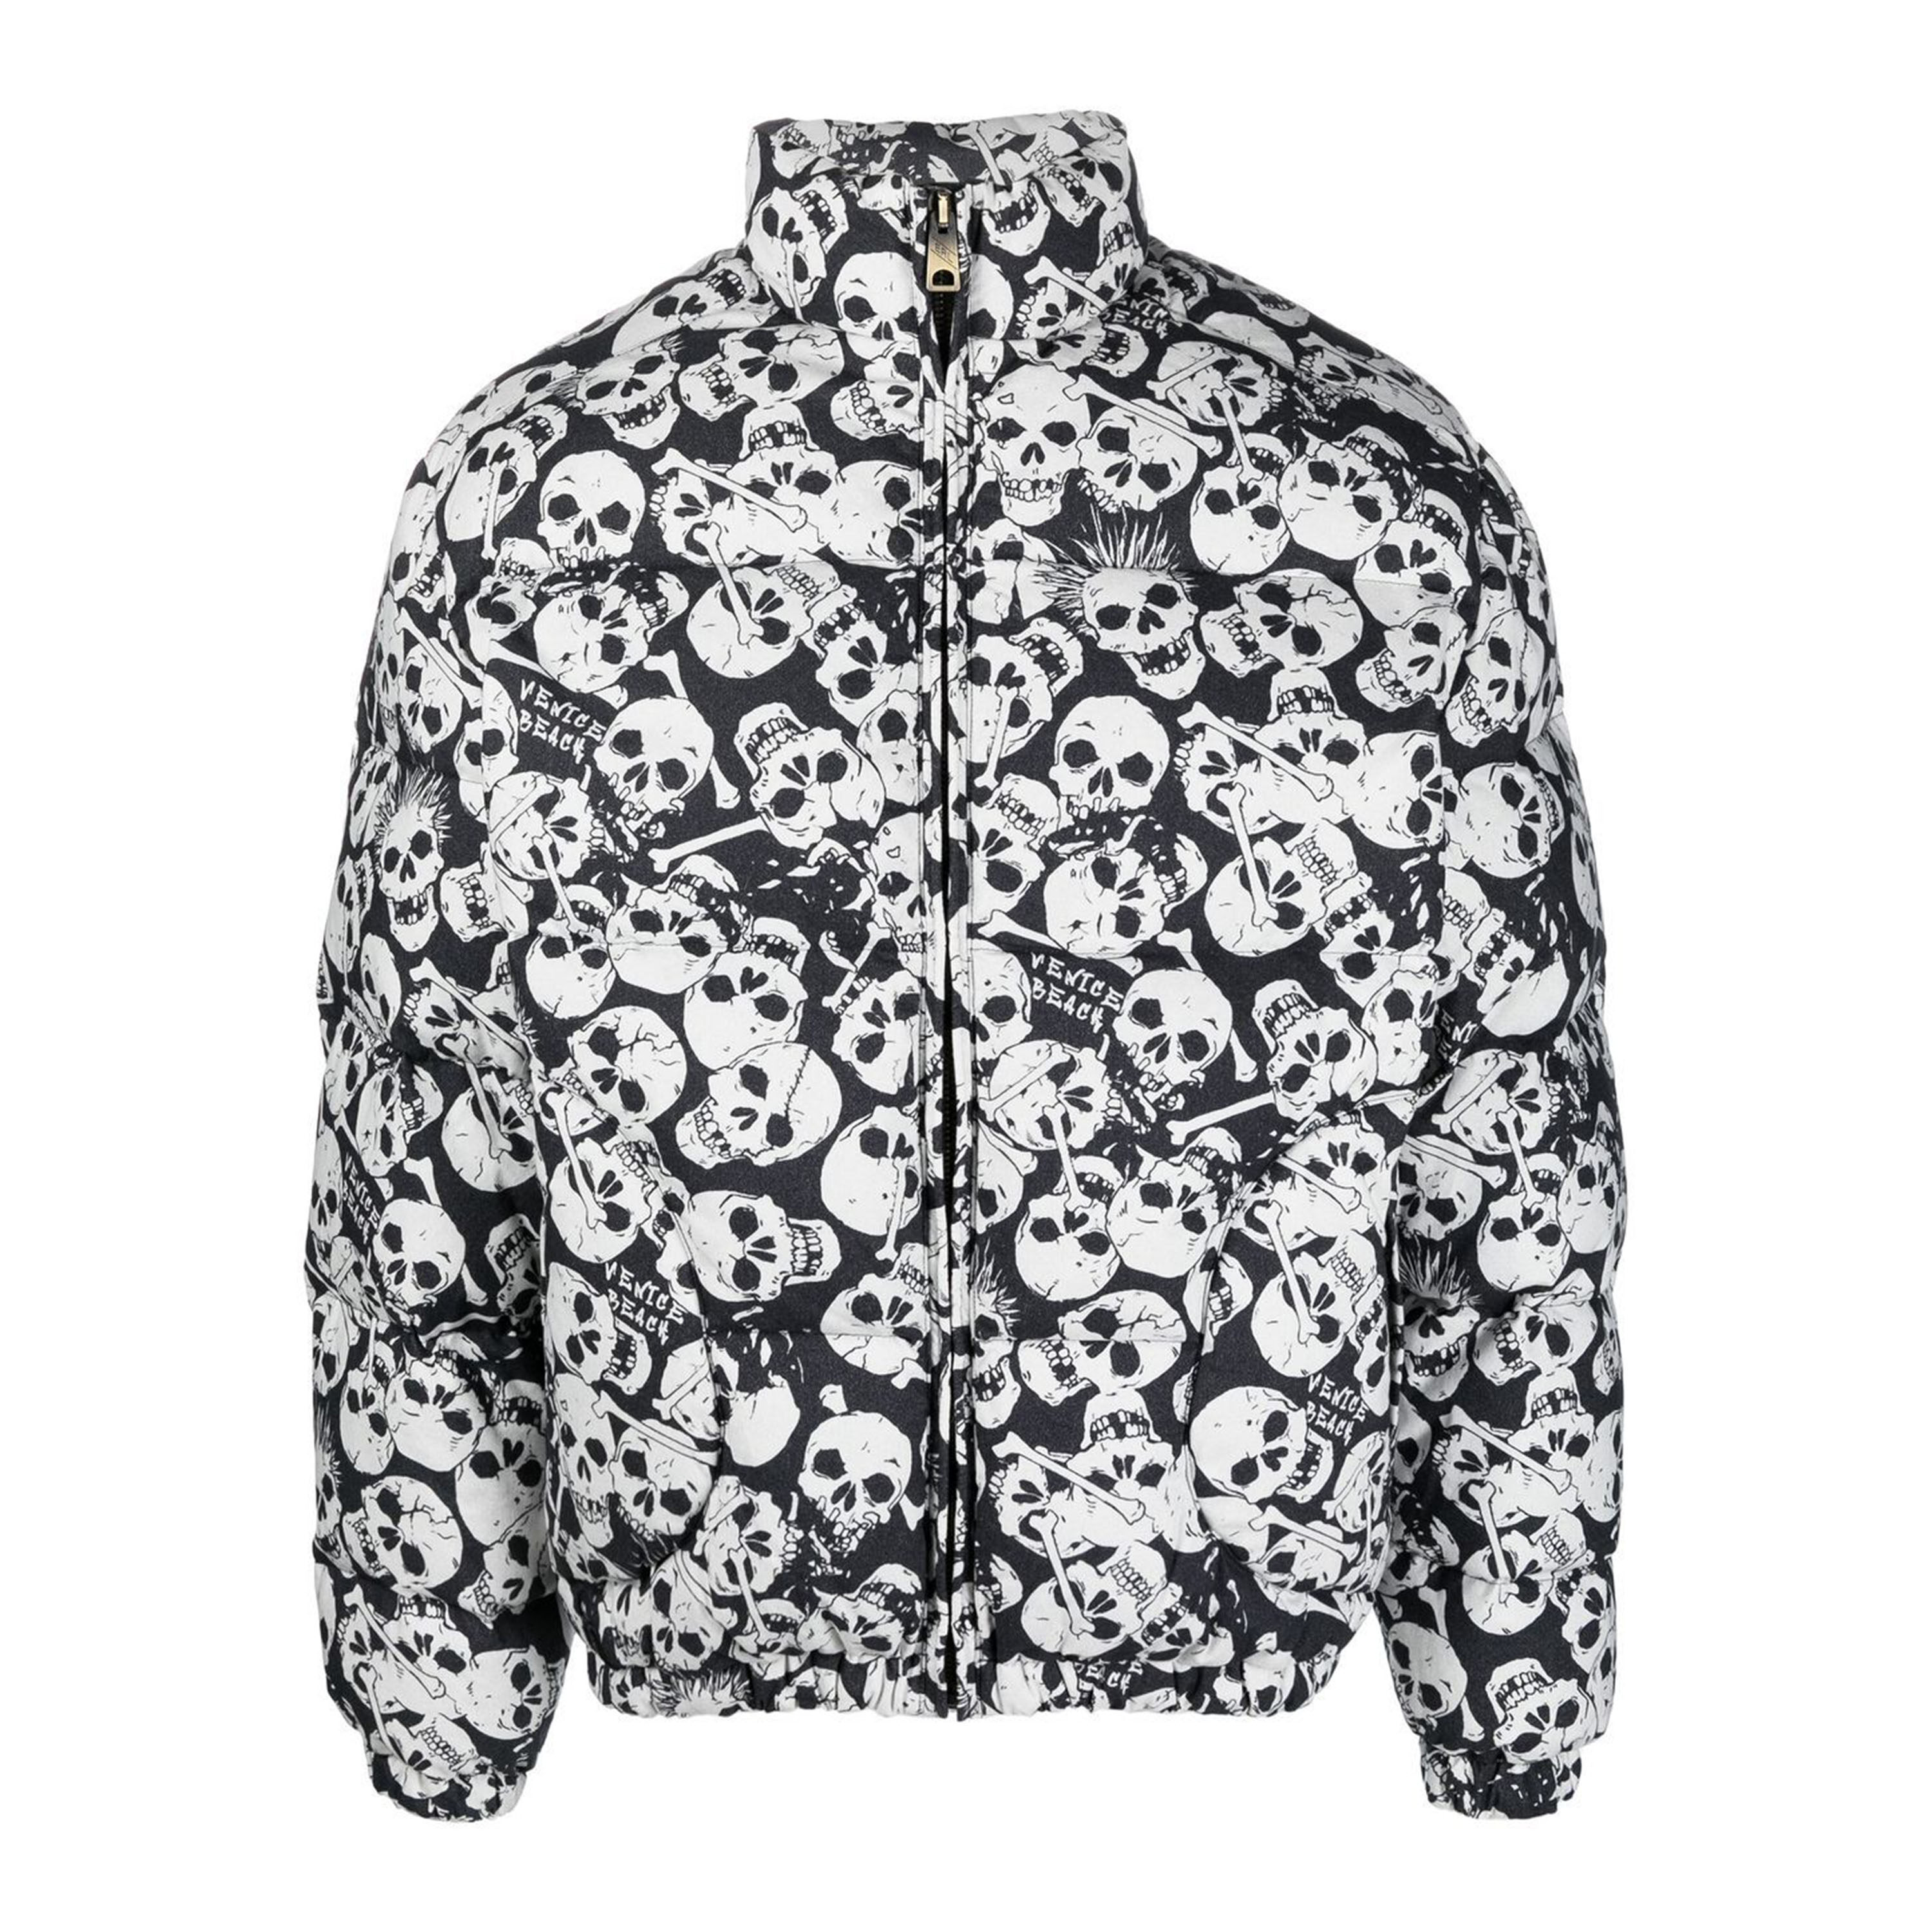 Jacket, Puffer Jacket, 80% Duck Down Filling, Street FashionSkull Pattern, High Collar Zipper